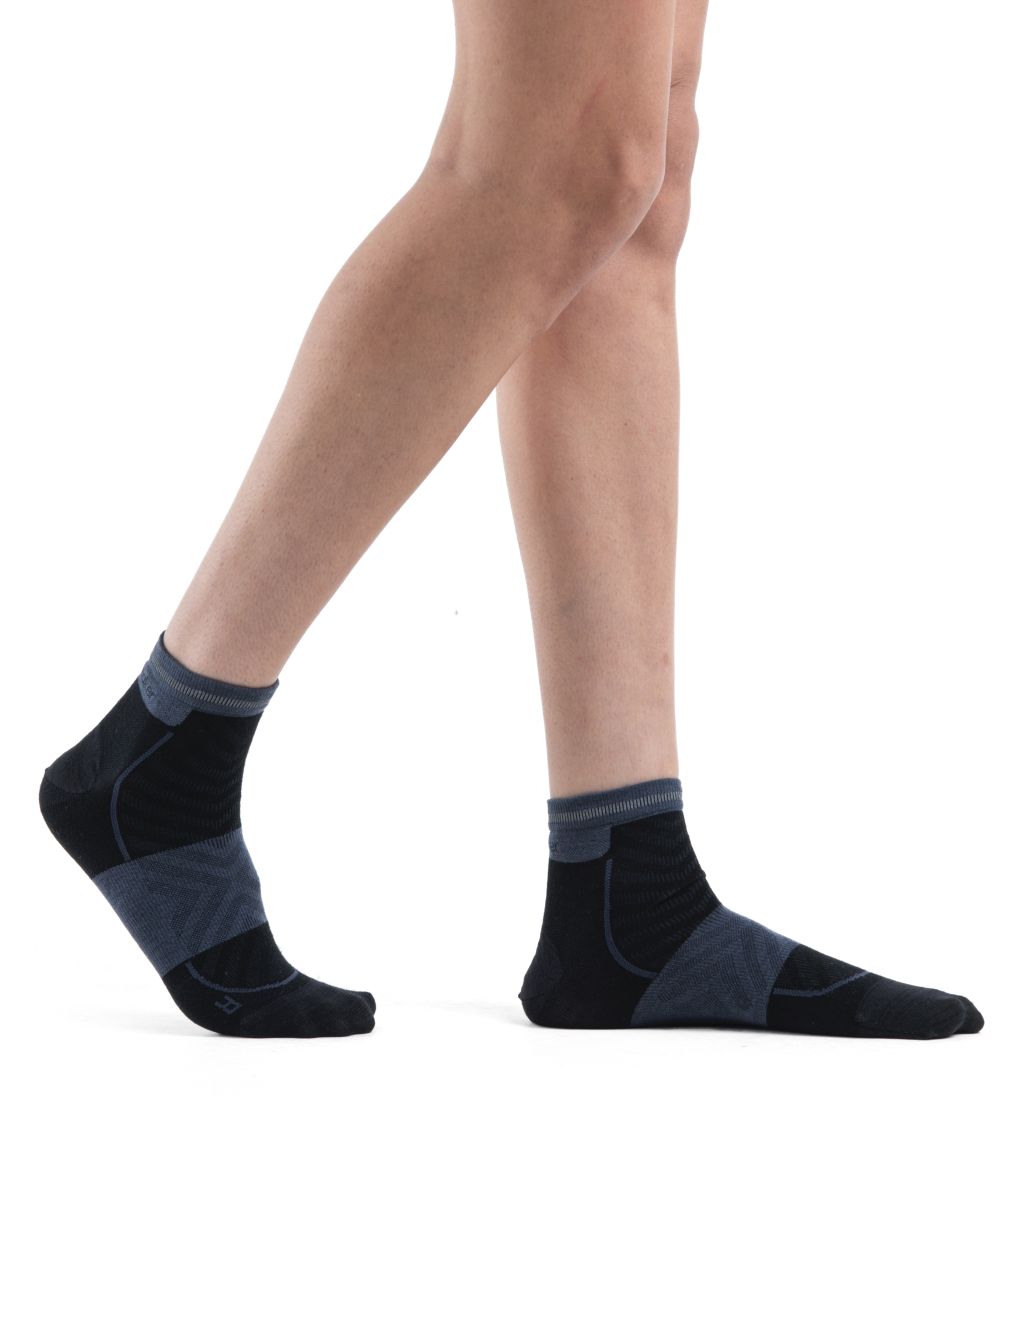 Dámské merino ponožky ICEBREAKER Wmns Merino Run+ Ultralight Mini, Black/Graphite velikost: 41-43 (L)